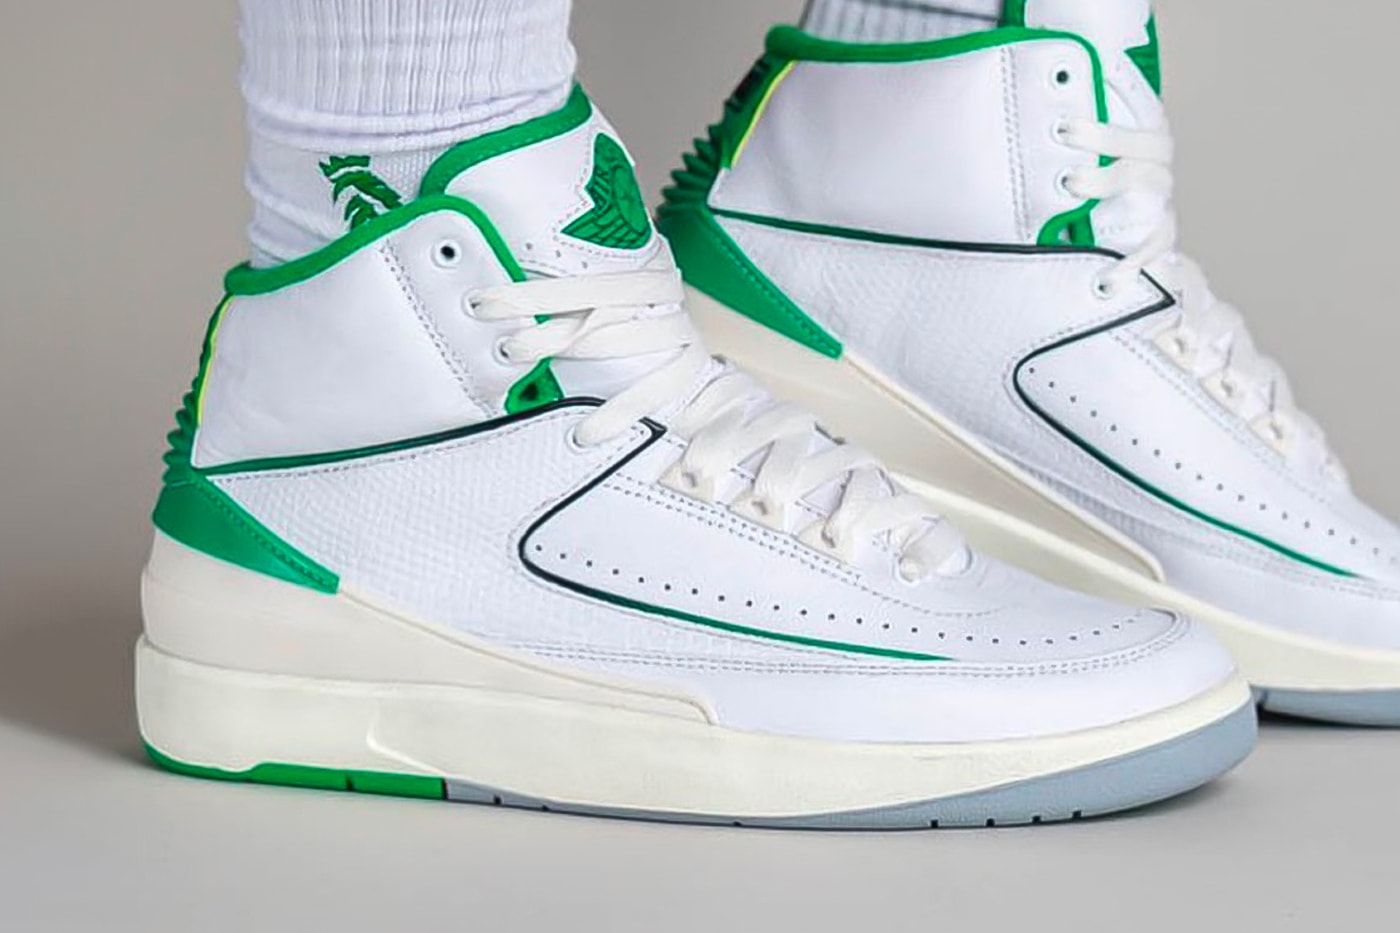 Gucci Tiger Classic Symbol Green And Red Version Air Jordan 13 Sneakers